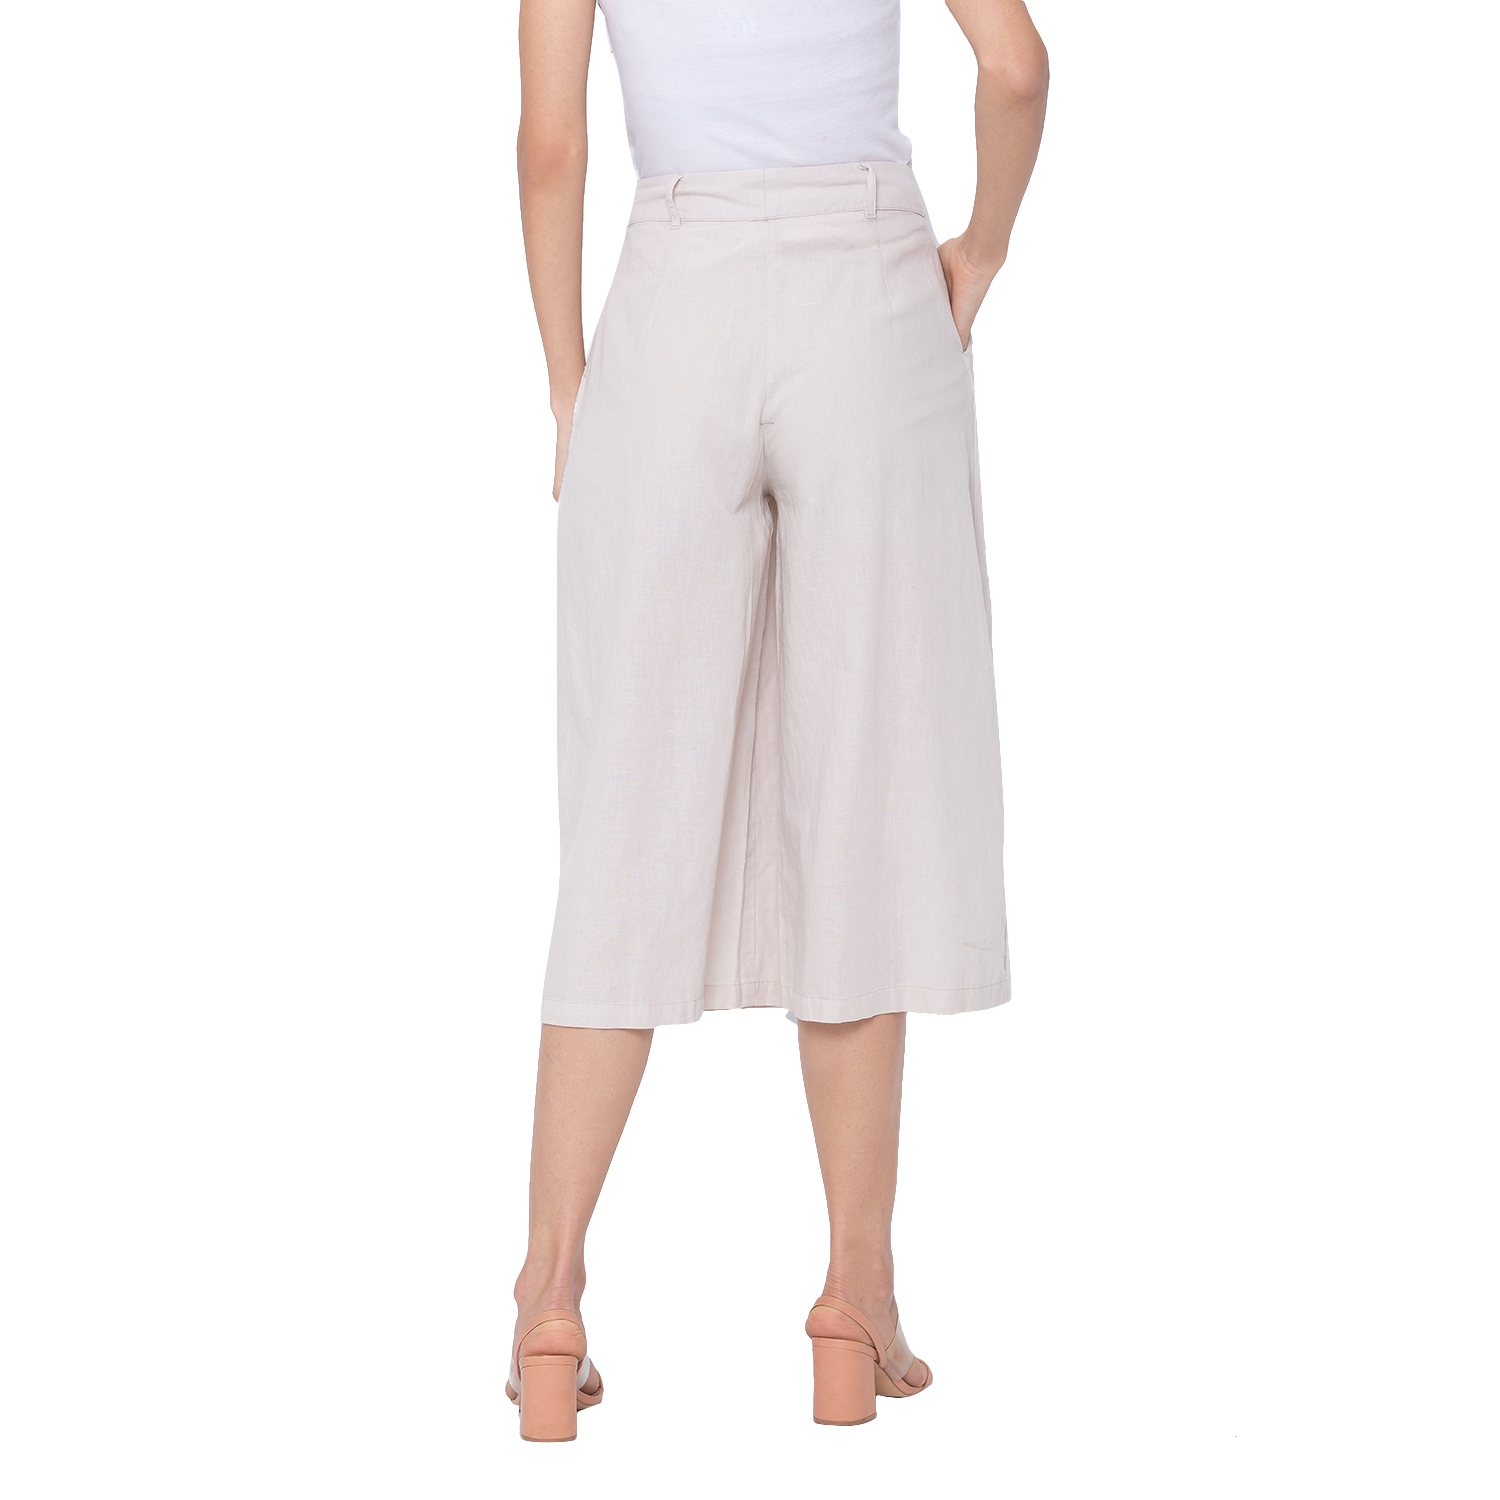 globus | Women's White Cotton Solid Culottes 2